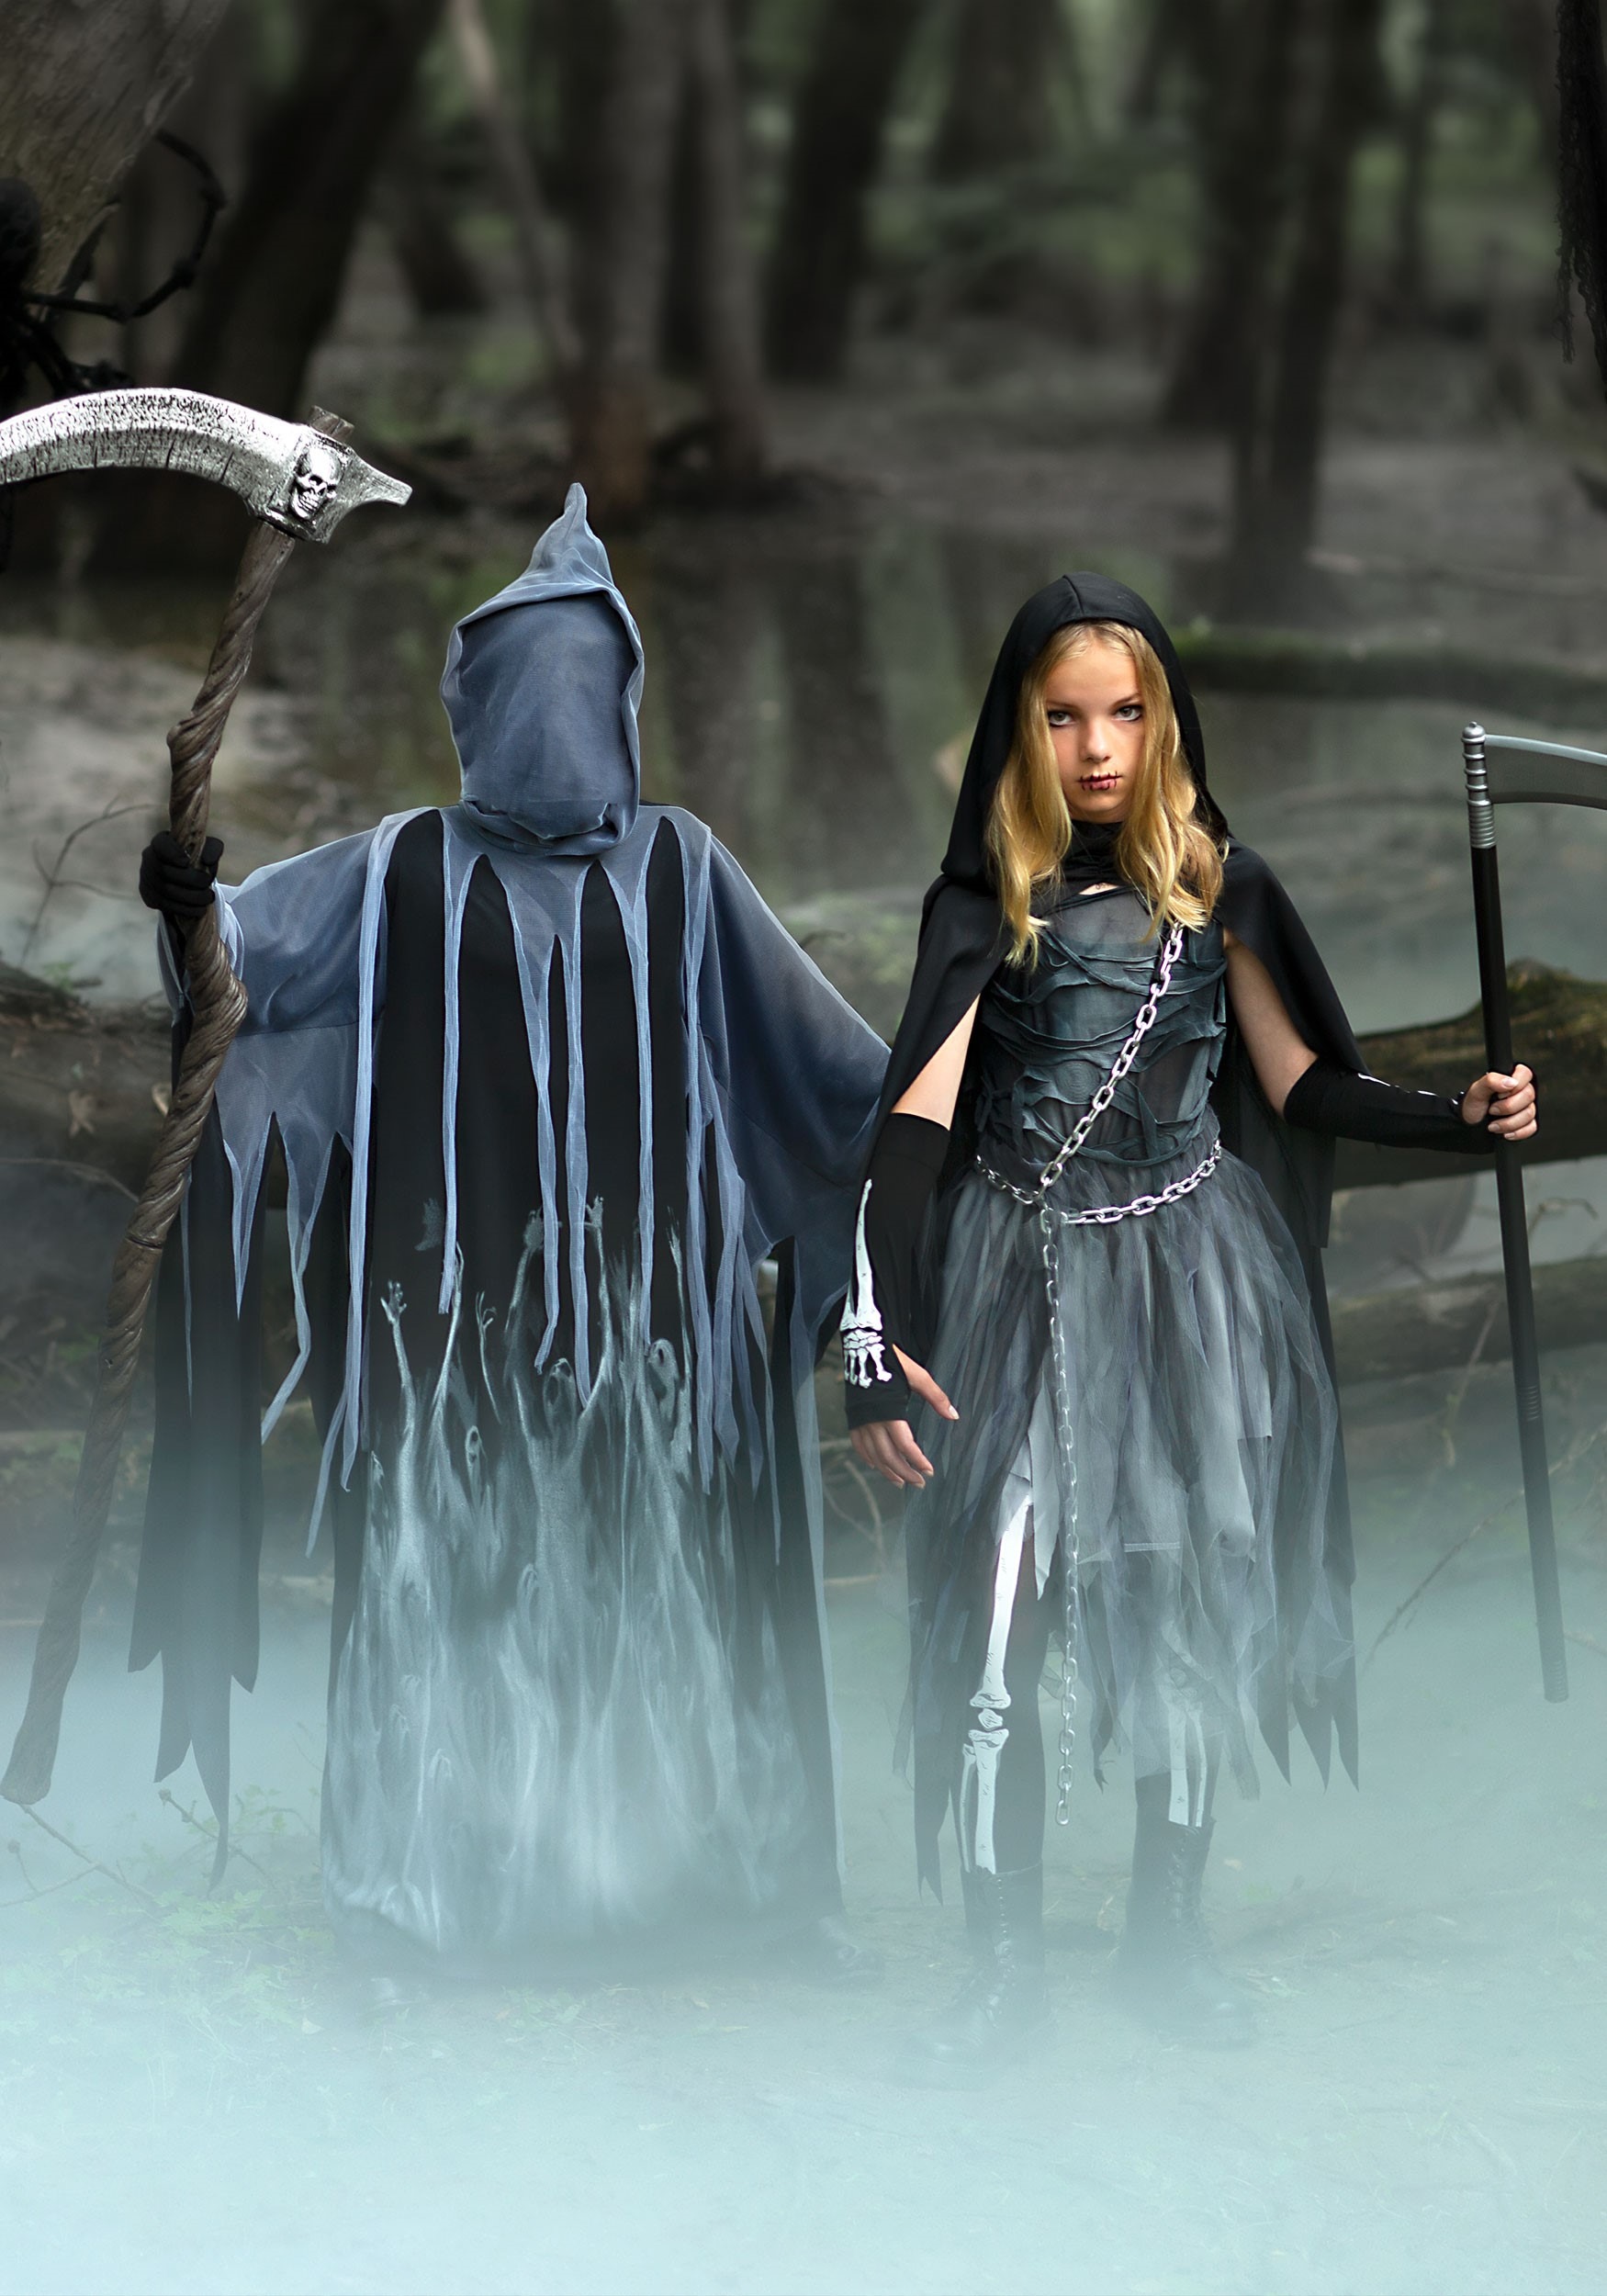 Soul Taker Costume For Kids , Grim Reaper Costume For Kids